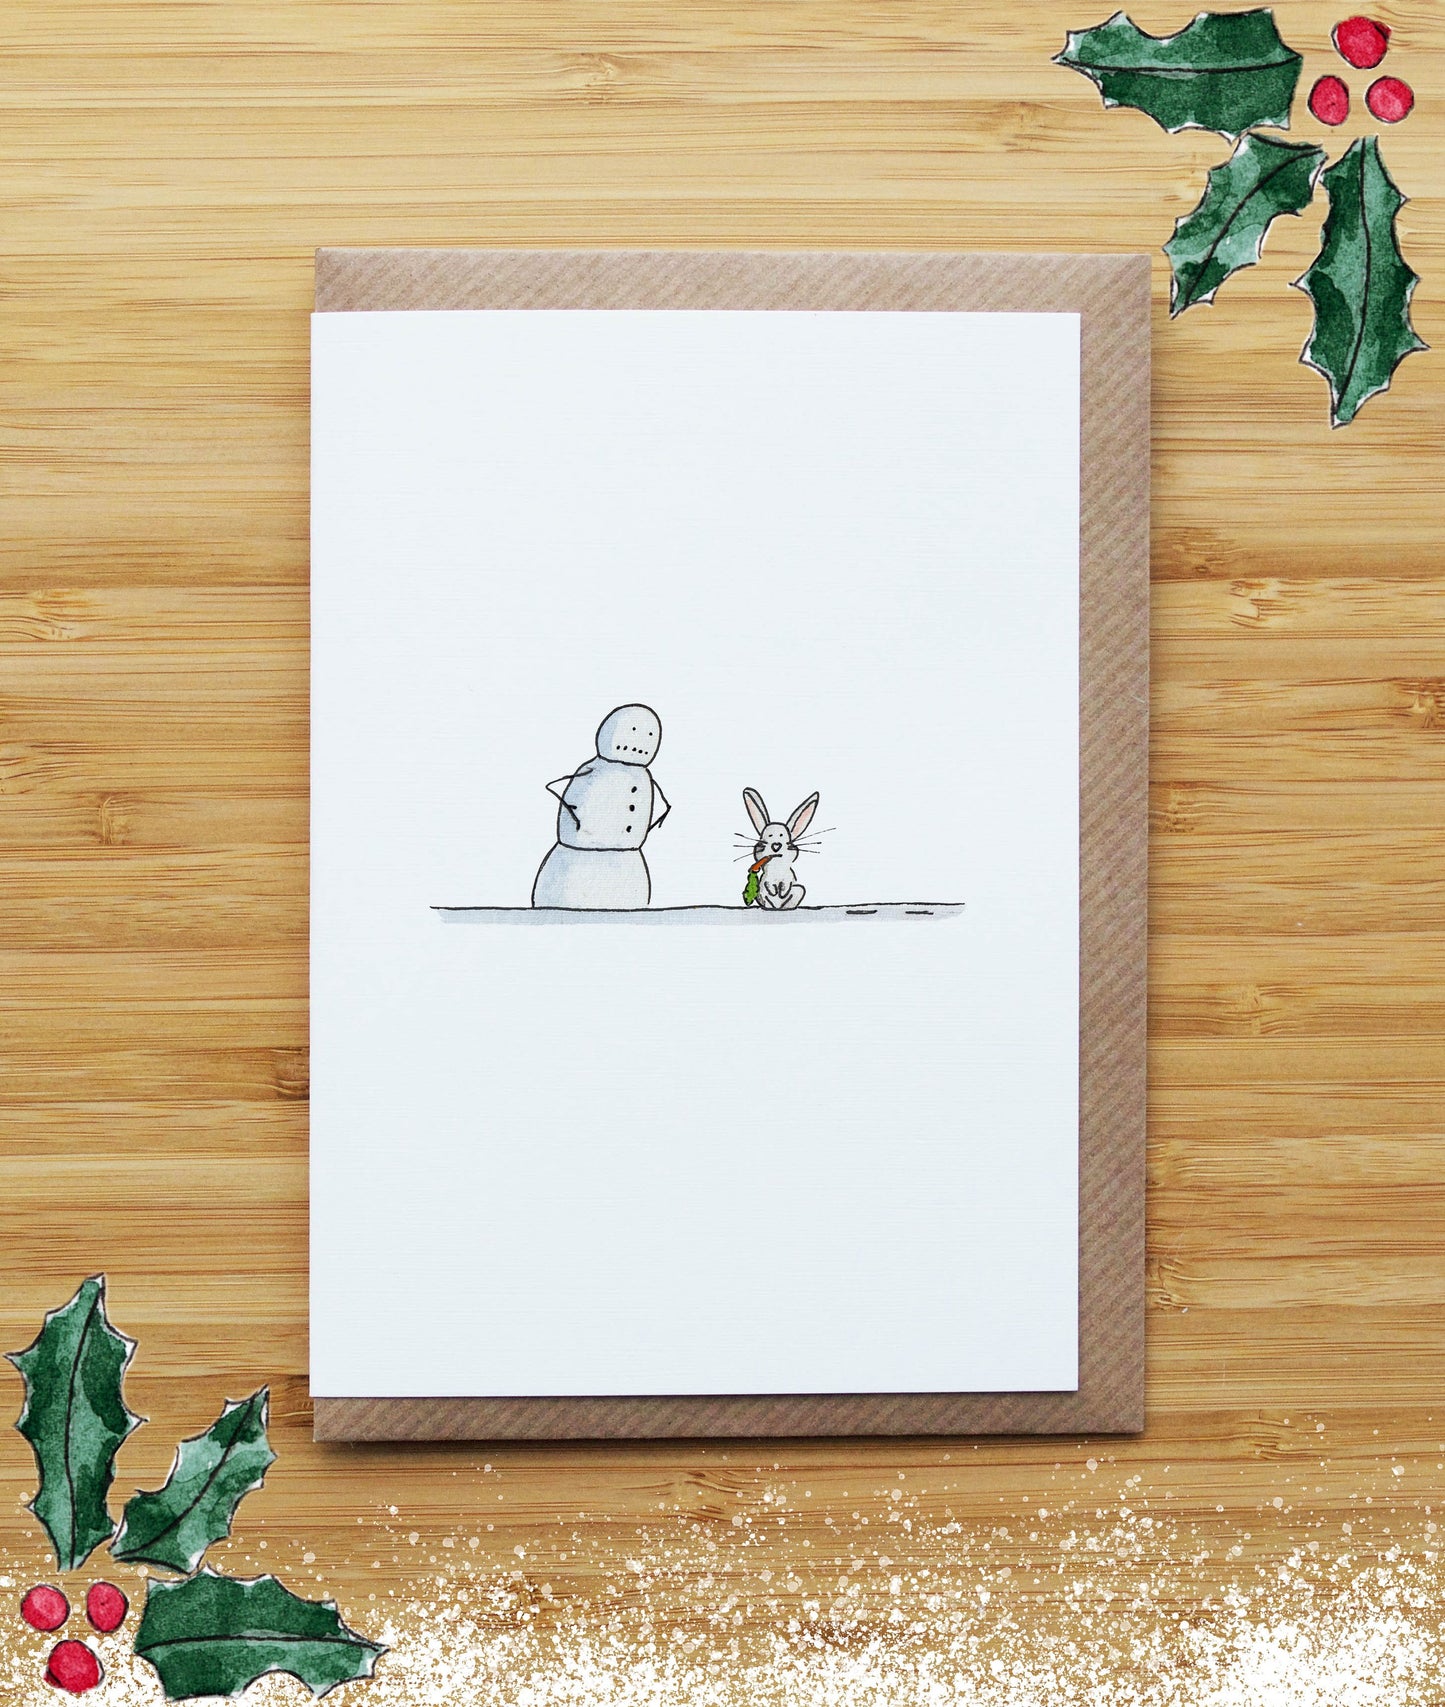 Snowman and Rabbit